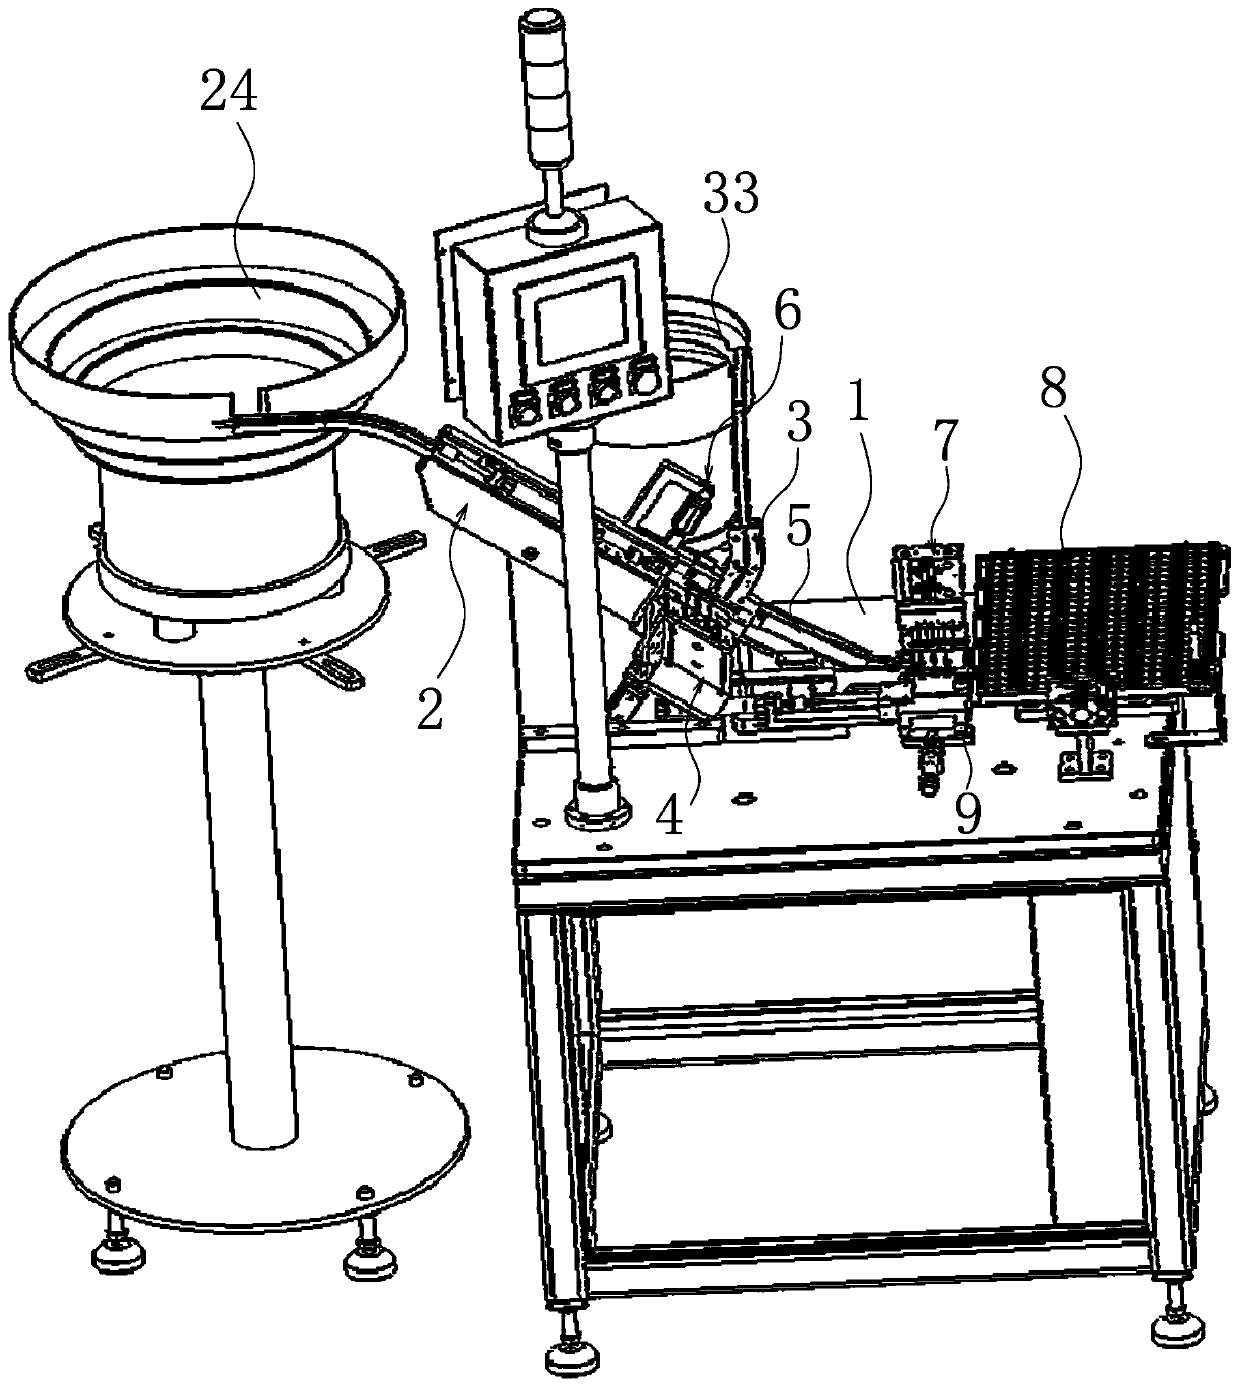 Welding ring press-fitting machine